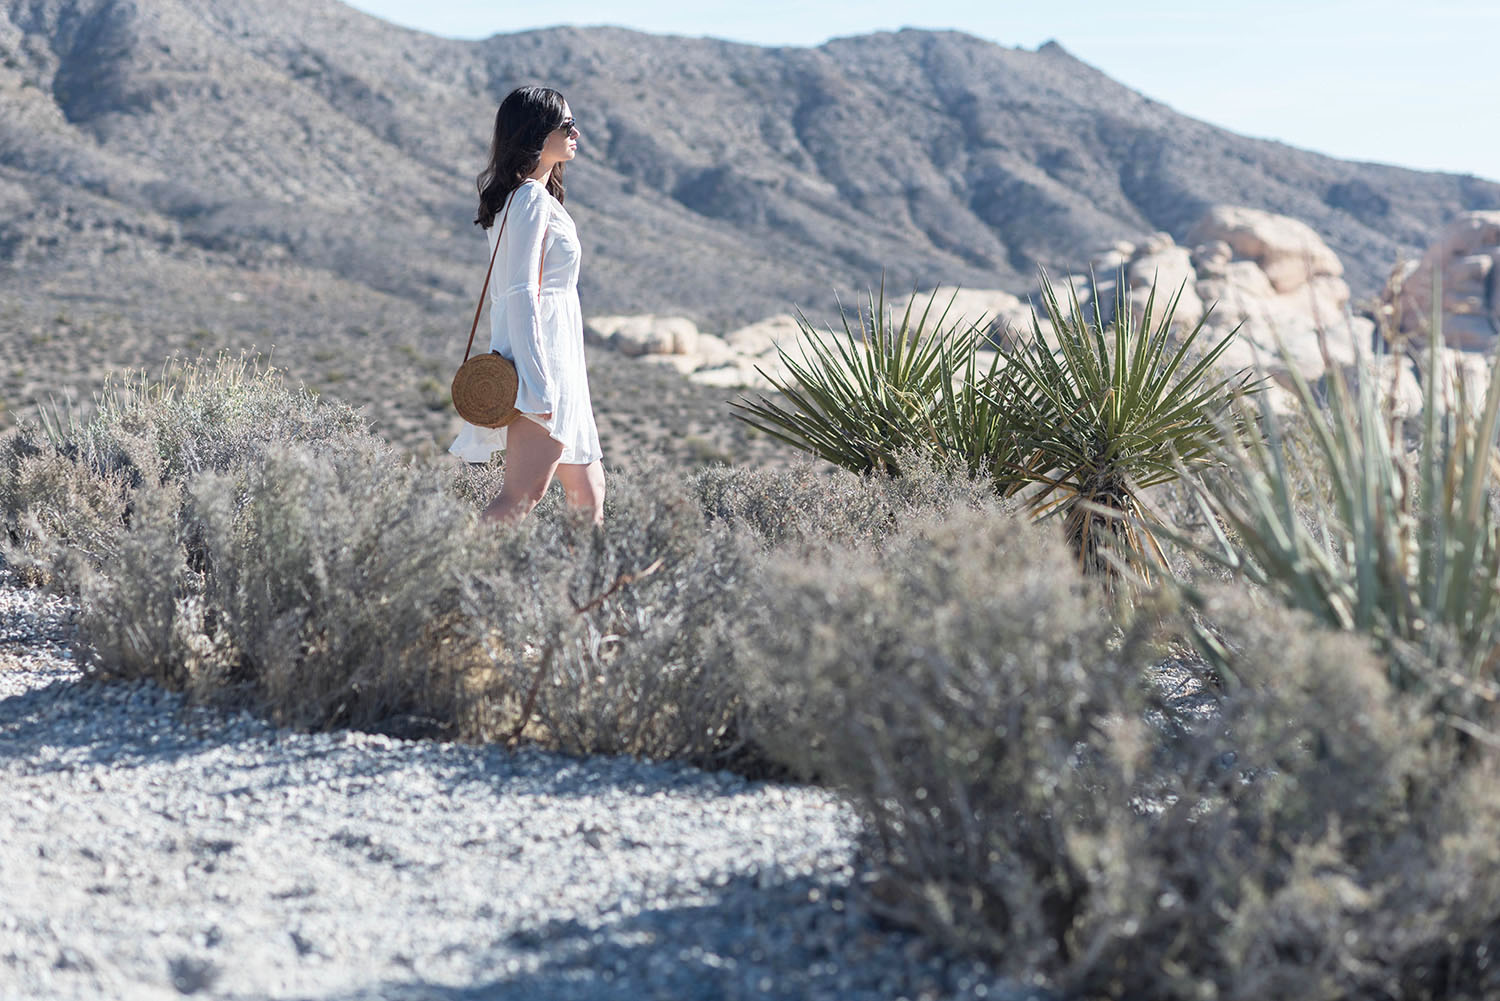 Winnipeg fashion blogger Cee Fardoe of Coco & Vera walks at Red Rock Canyon in Nevada wearing a Tobi dress and carrying a rattan bag